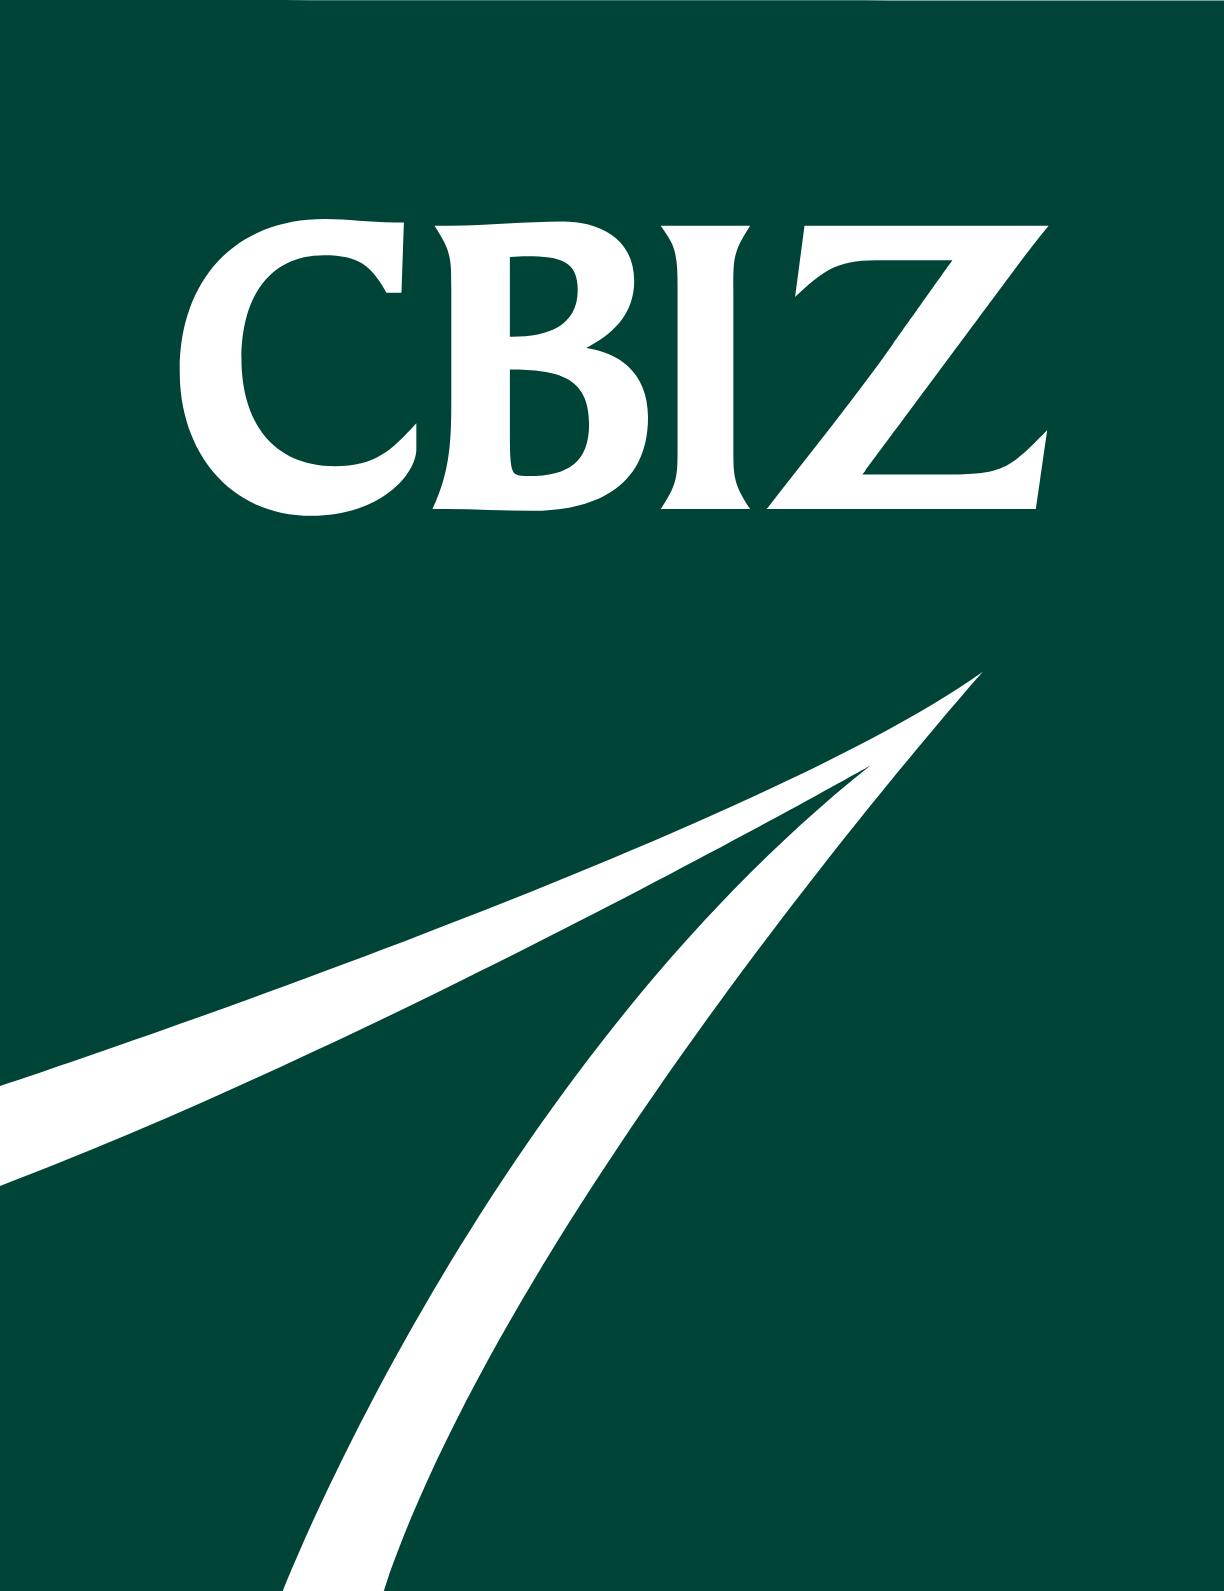 CBIZ logo large (transparent PNG)